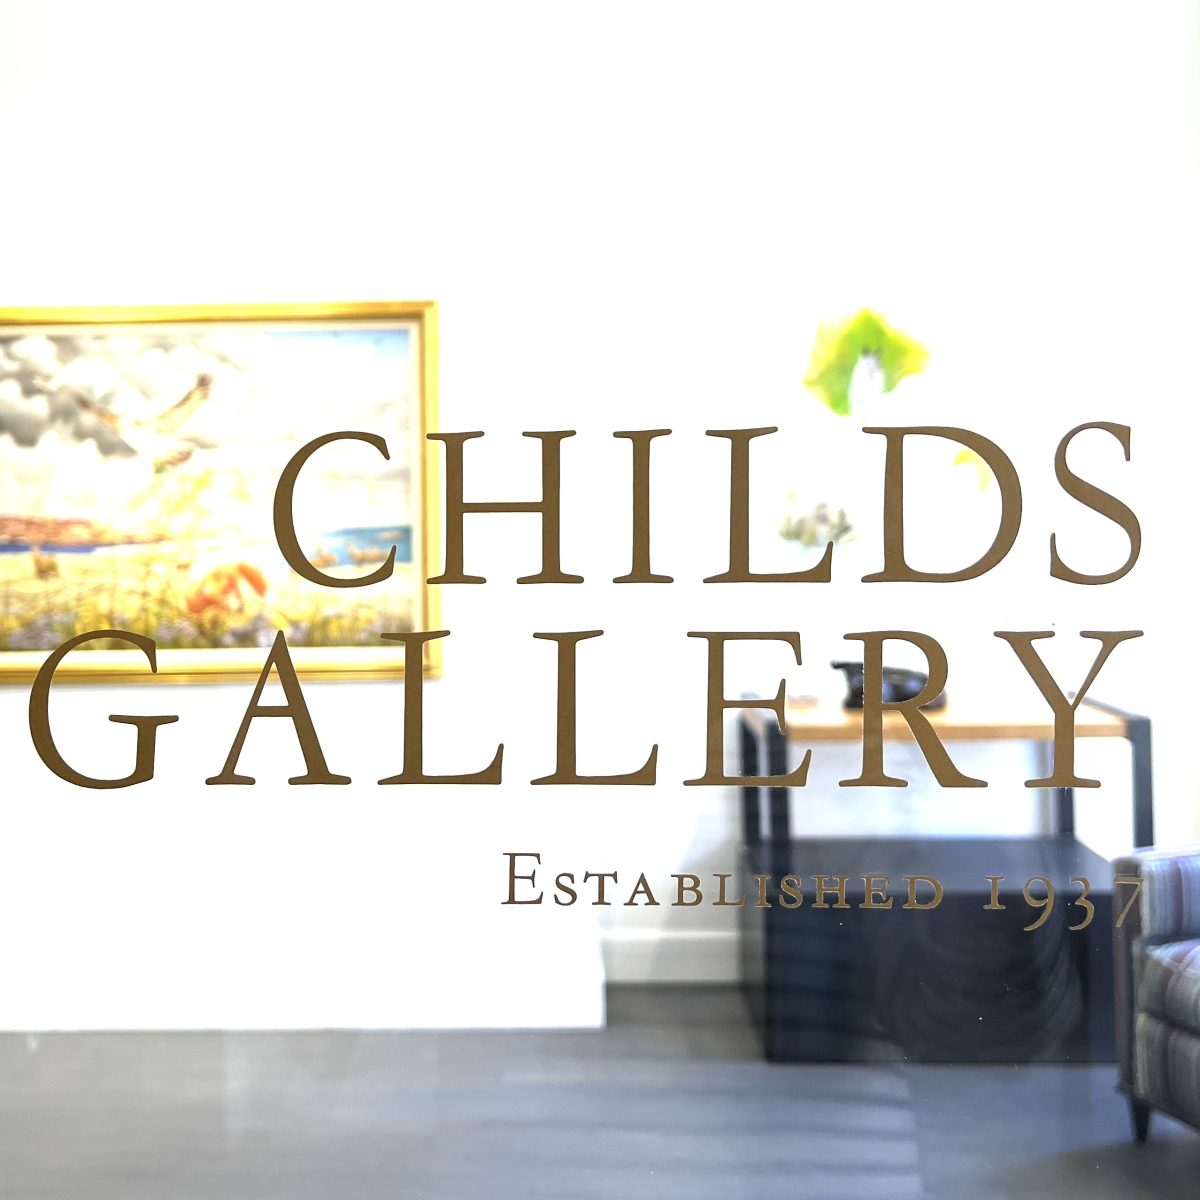 Childs Gallery